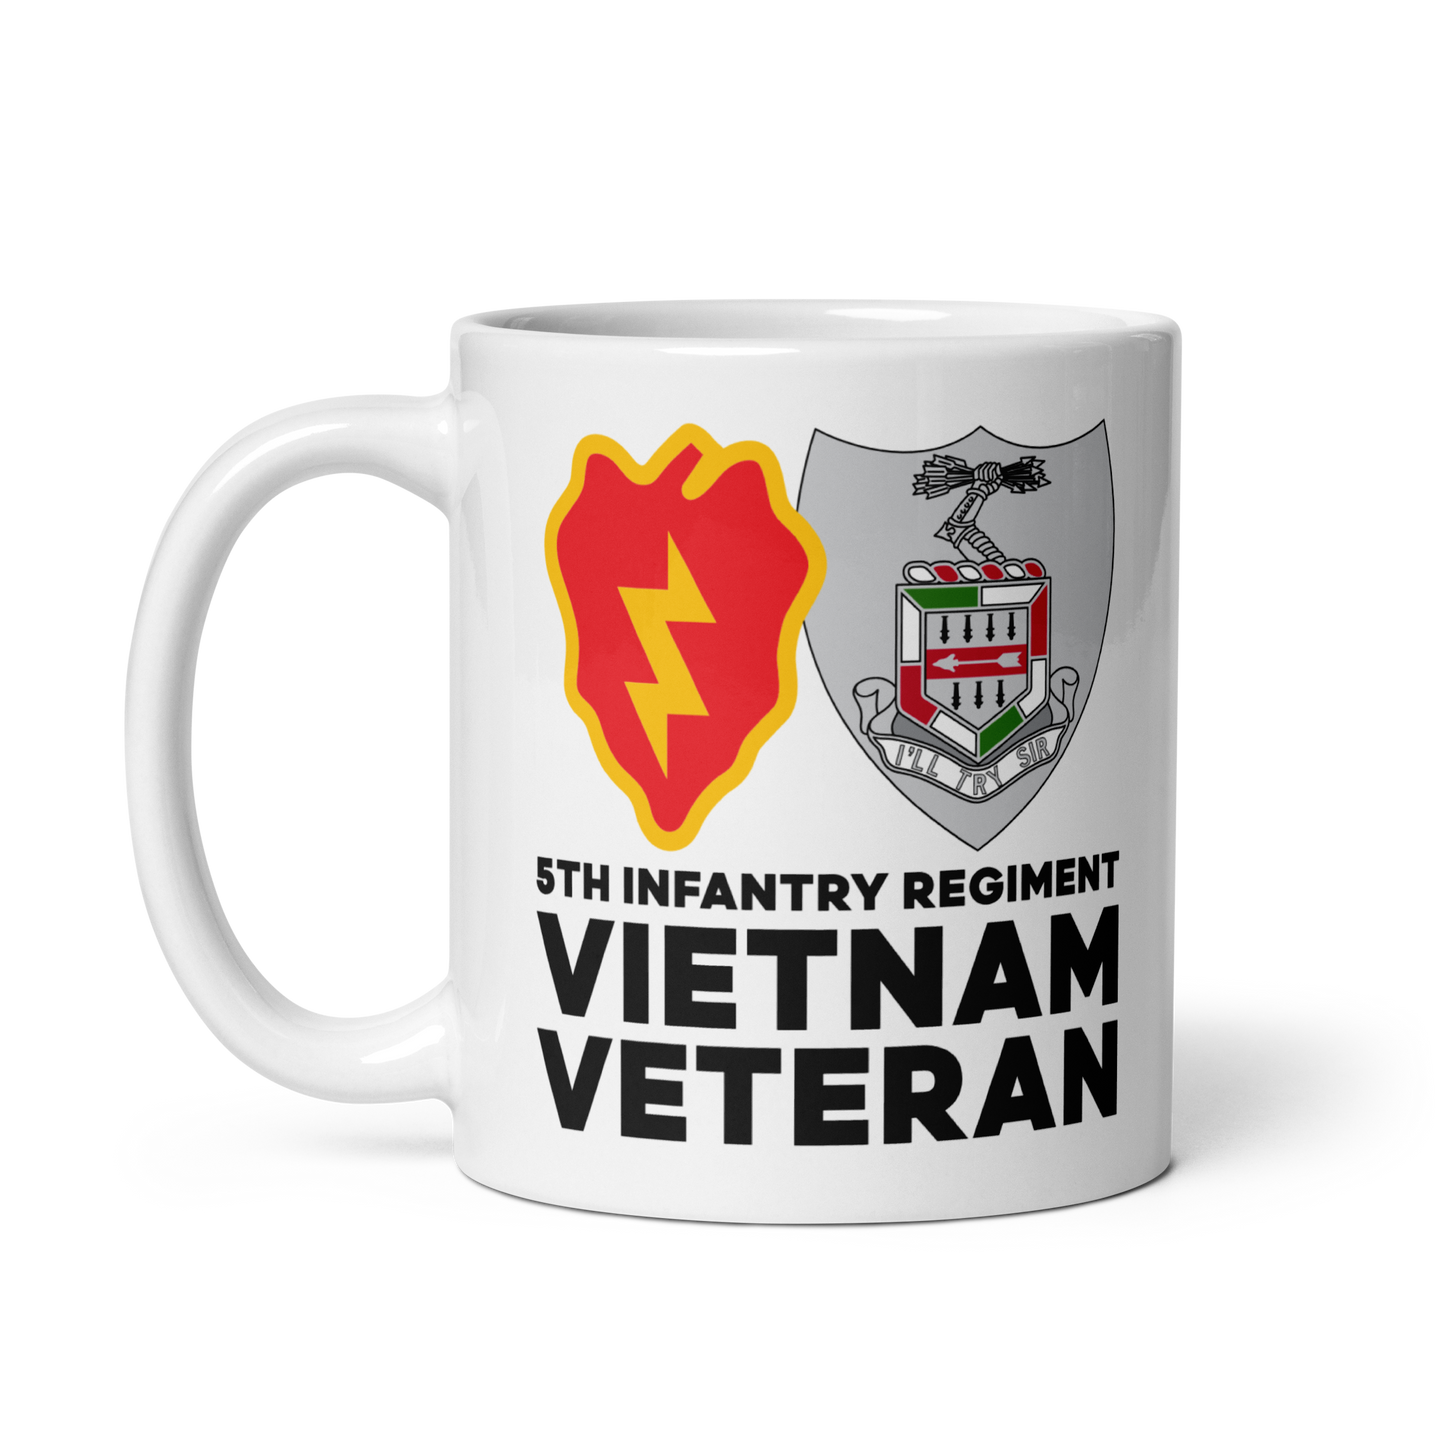 25th Infantry Division, 5th Infantry Regiment Vietnam Veteran 11oz Ceramic Mug